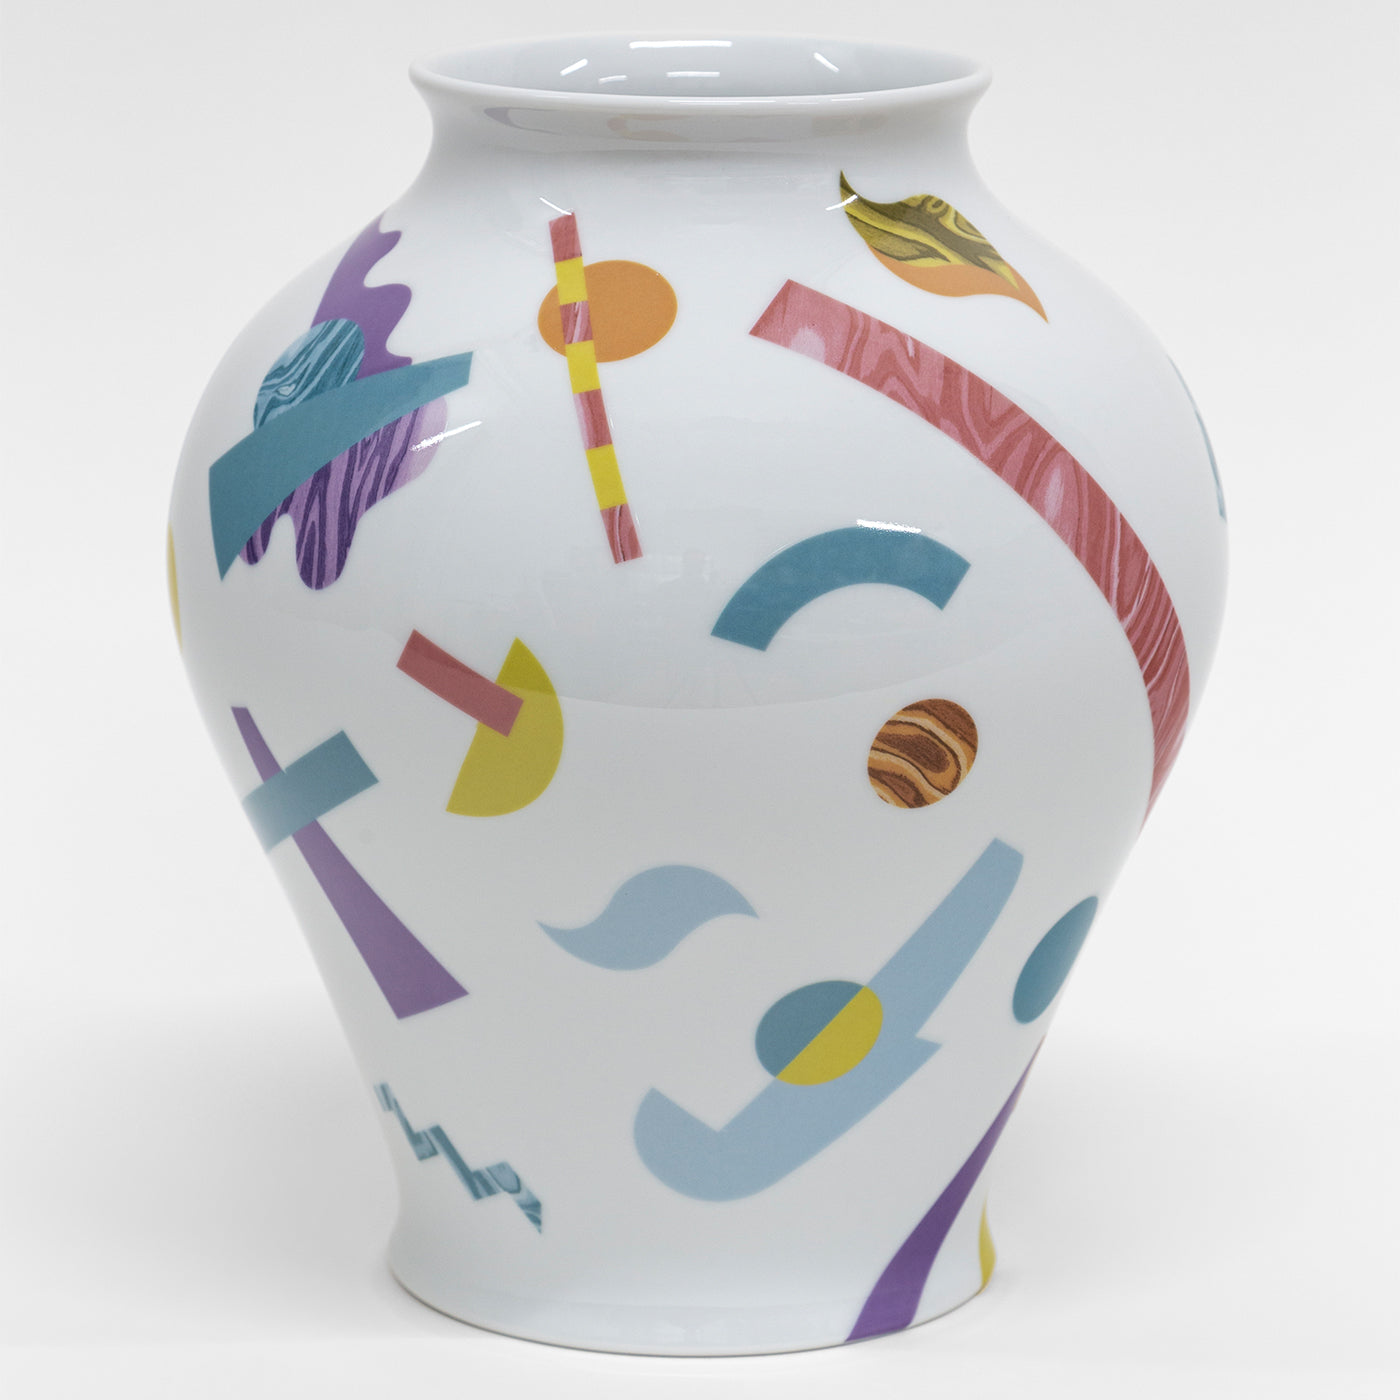 Alchimie Big Amphora Abstract Decor Porcelain Vase  - Alternative view 5